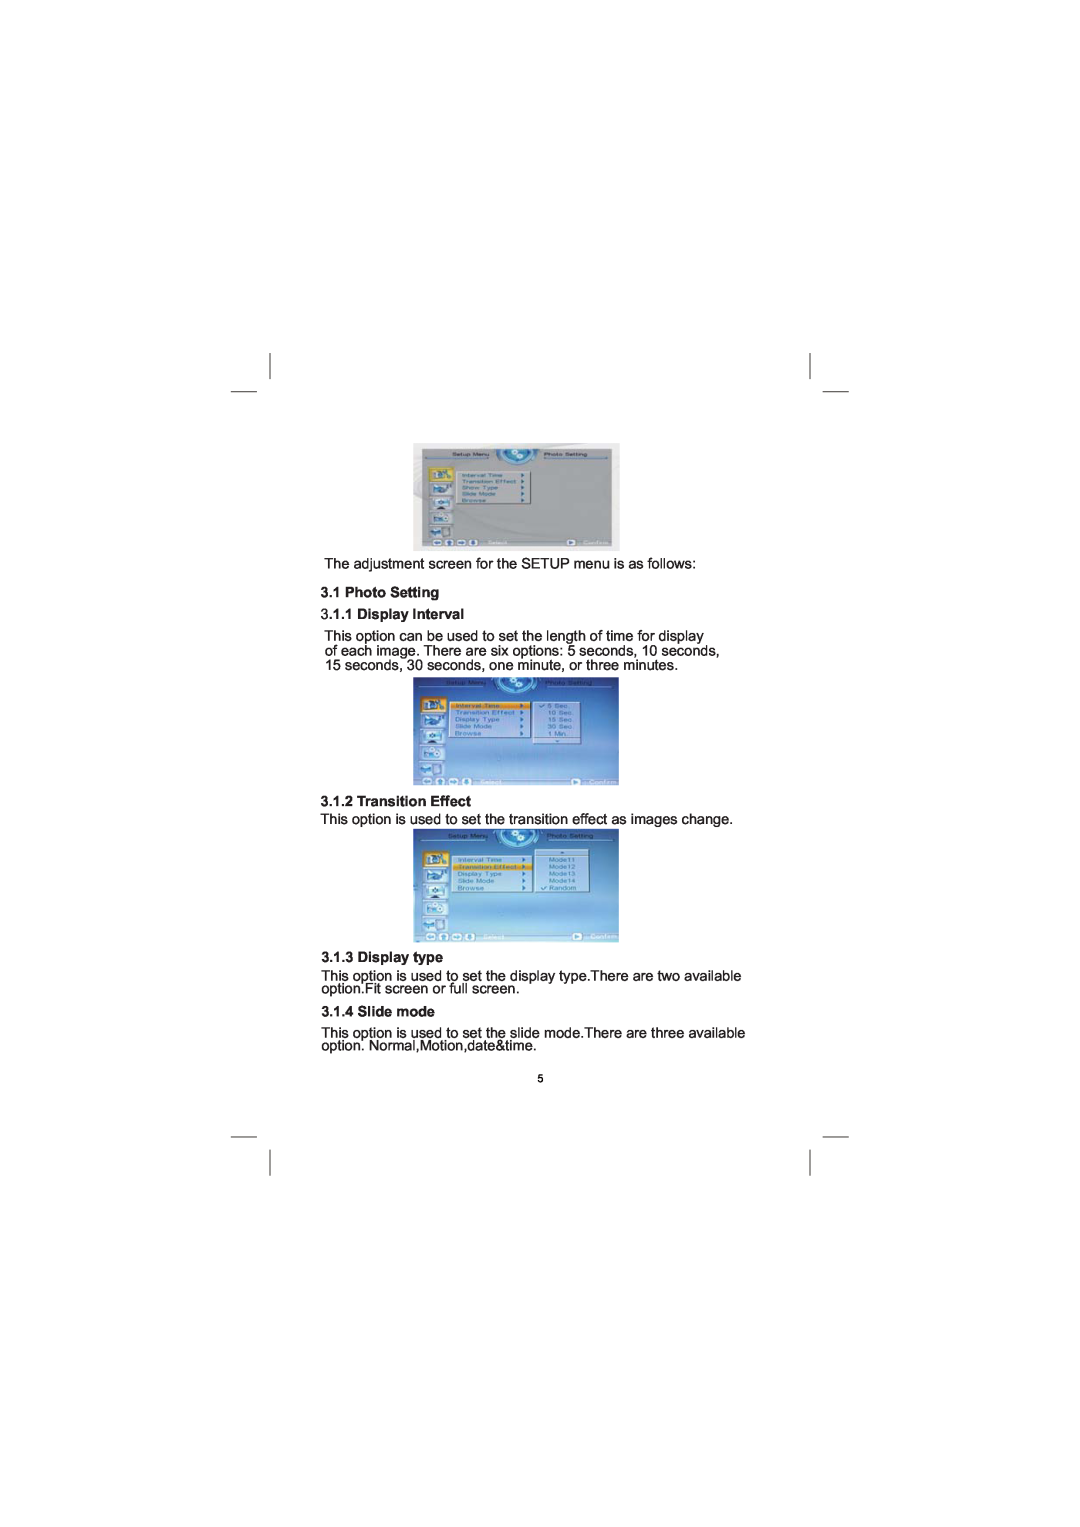 Sylvania SDPF1033 user manual Photo Setting 3.1.1 Display Interval, Transition Effect, Display type, Slide mode 